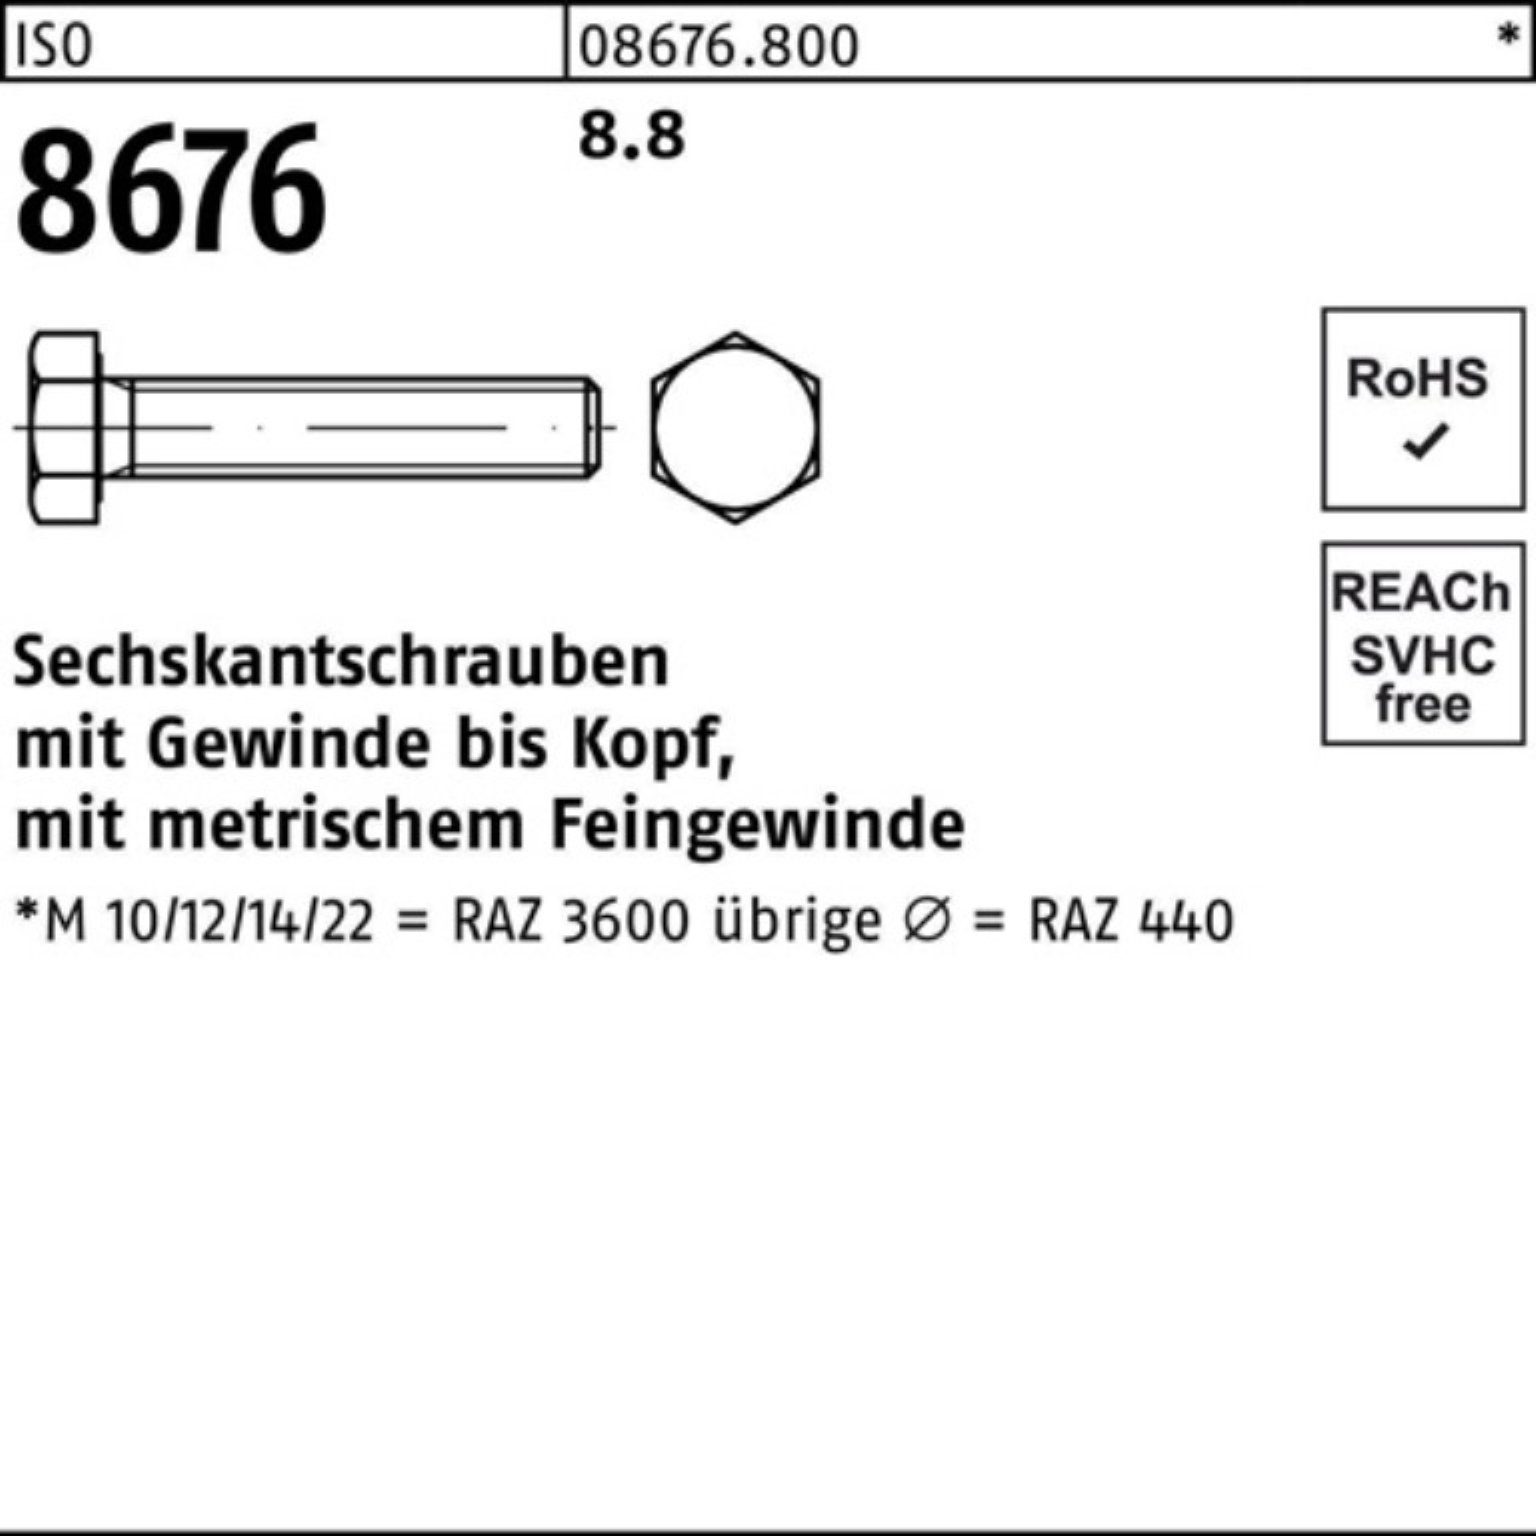 25 ISO Sechskantschraube Pack ISO Reyher Sechskantschraube VG M18x1,5x100 100er 8.8 8676 Stück